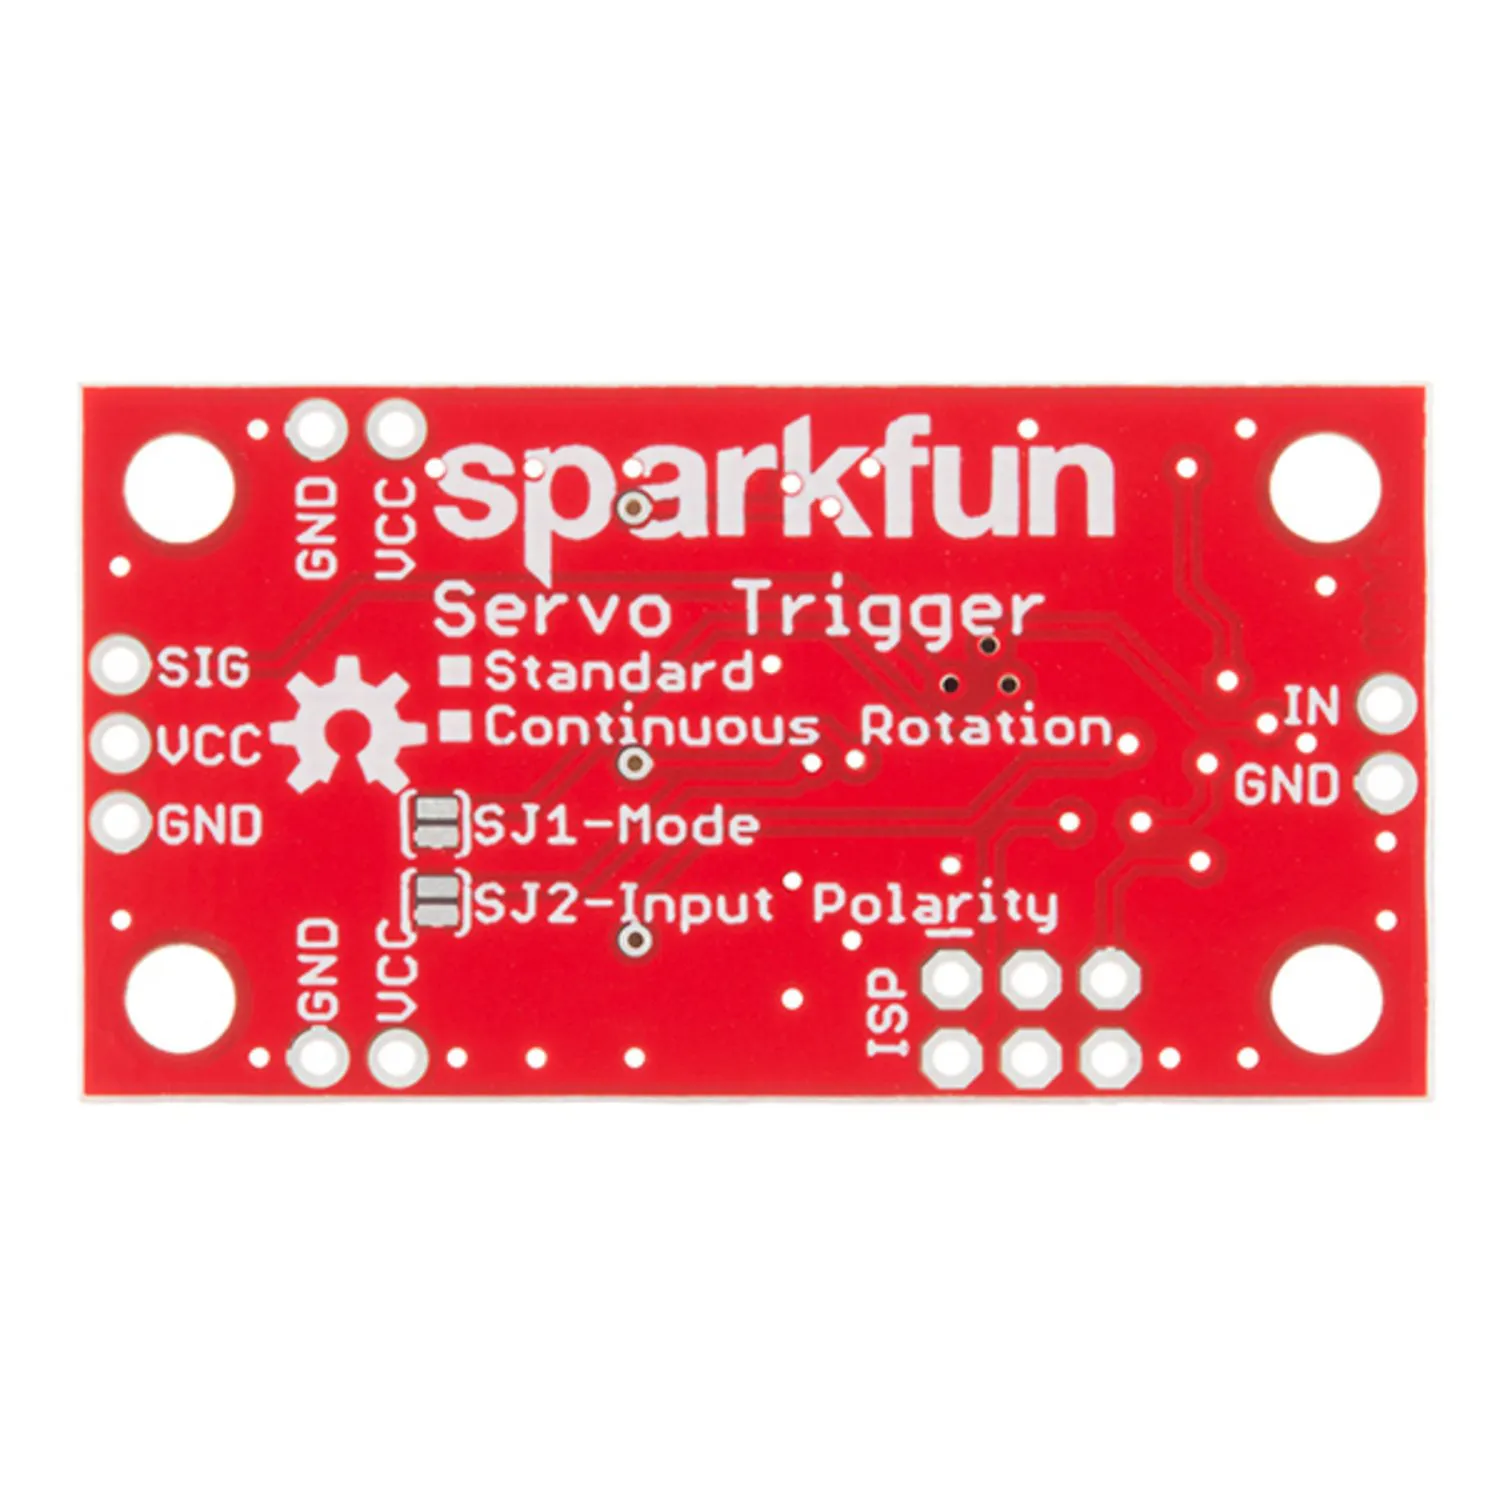 Photo of SparkFun Servo Trigger - Continuous Rotation